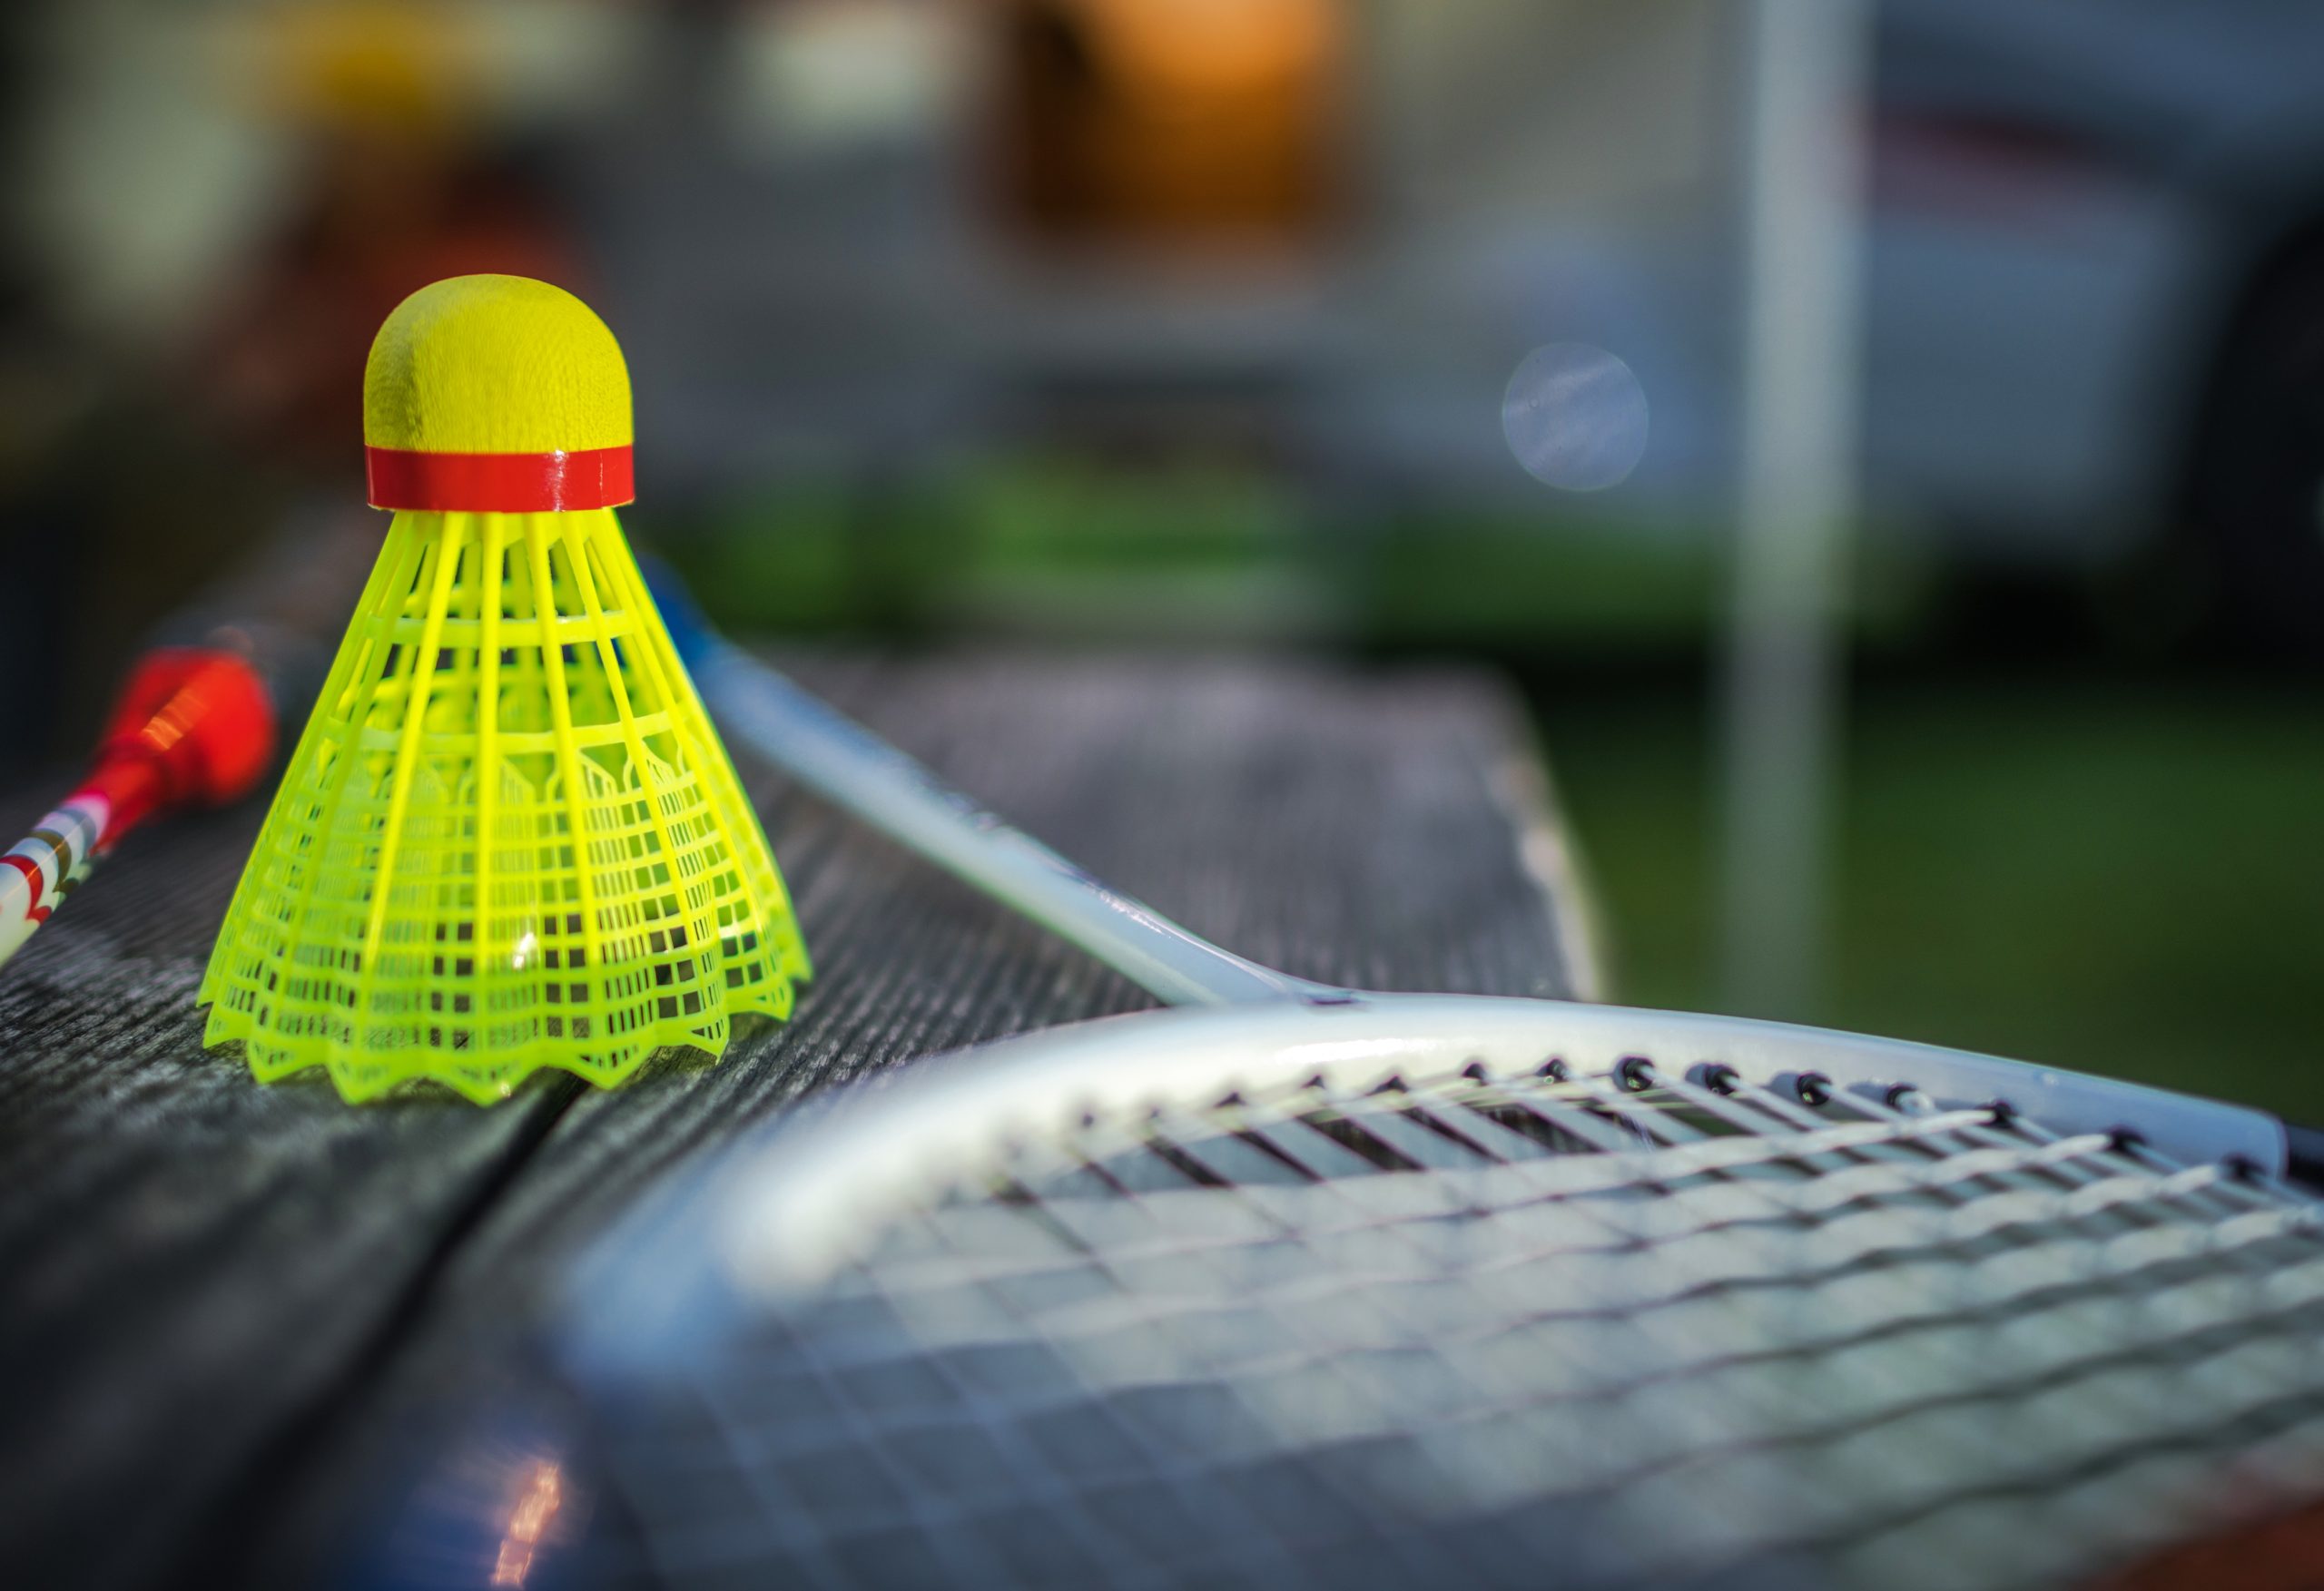 Badminton Racquet Sport. A Shuttlecock With a Plastic Skirt. Campsite Games. Sport Theme.